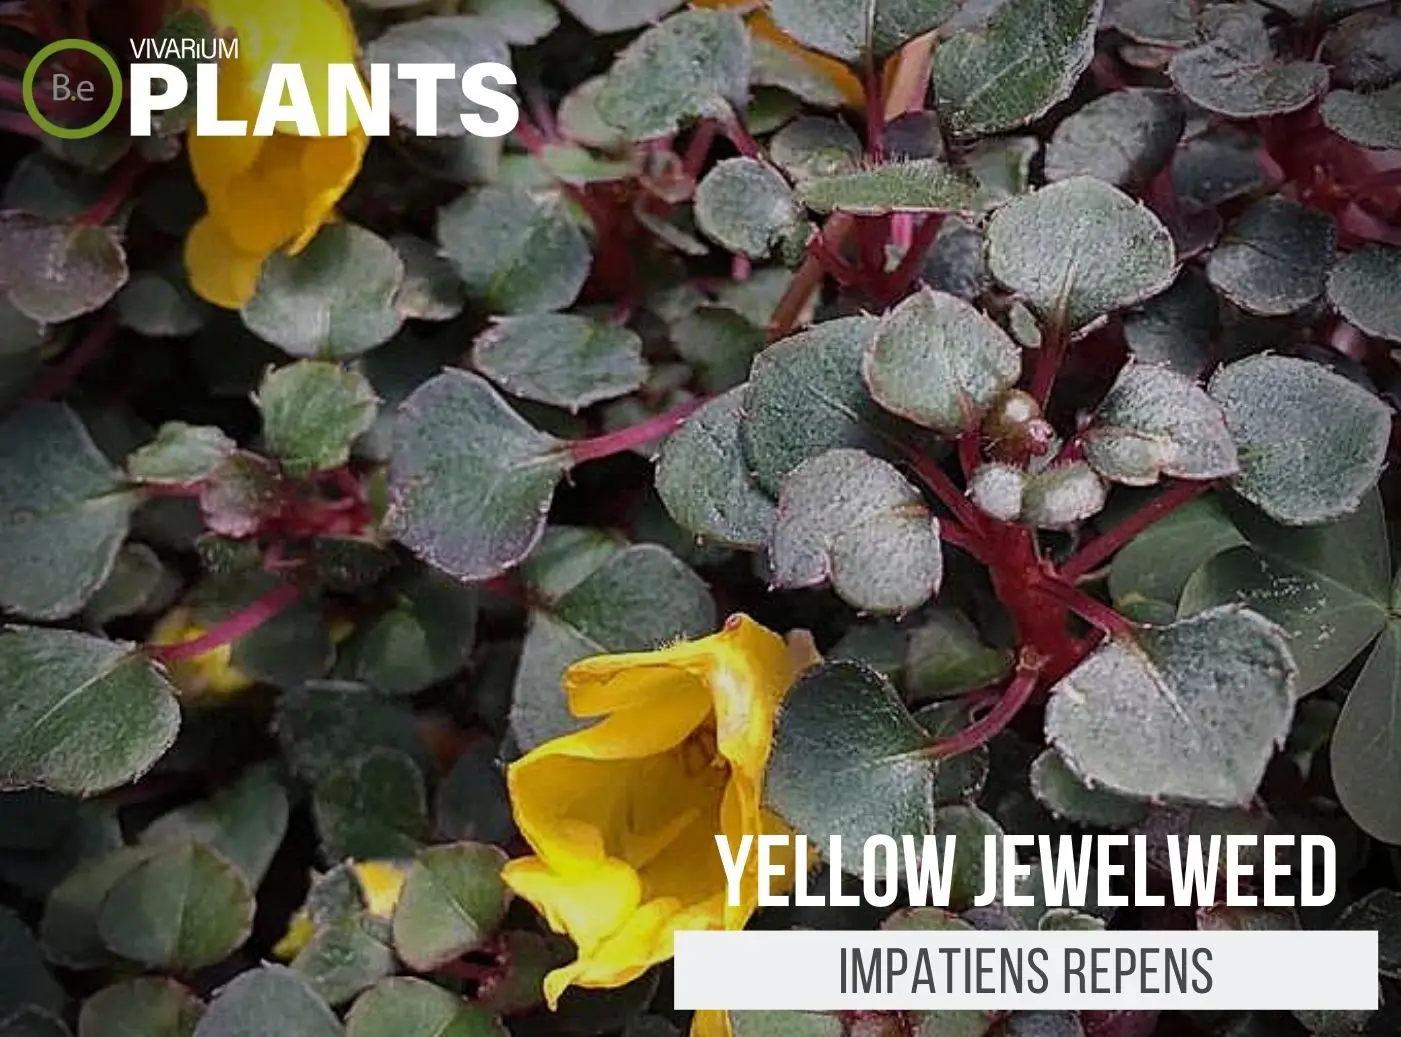 Impatiens Repens "Yellow Jewelweed" Care Guide | Vivarium Plants